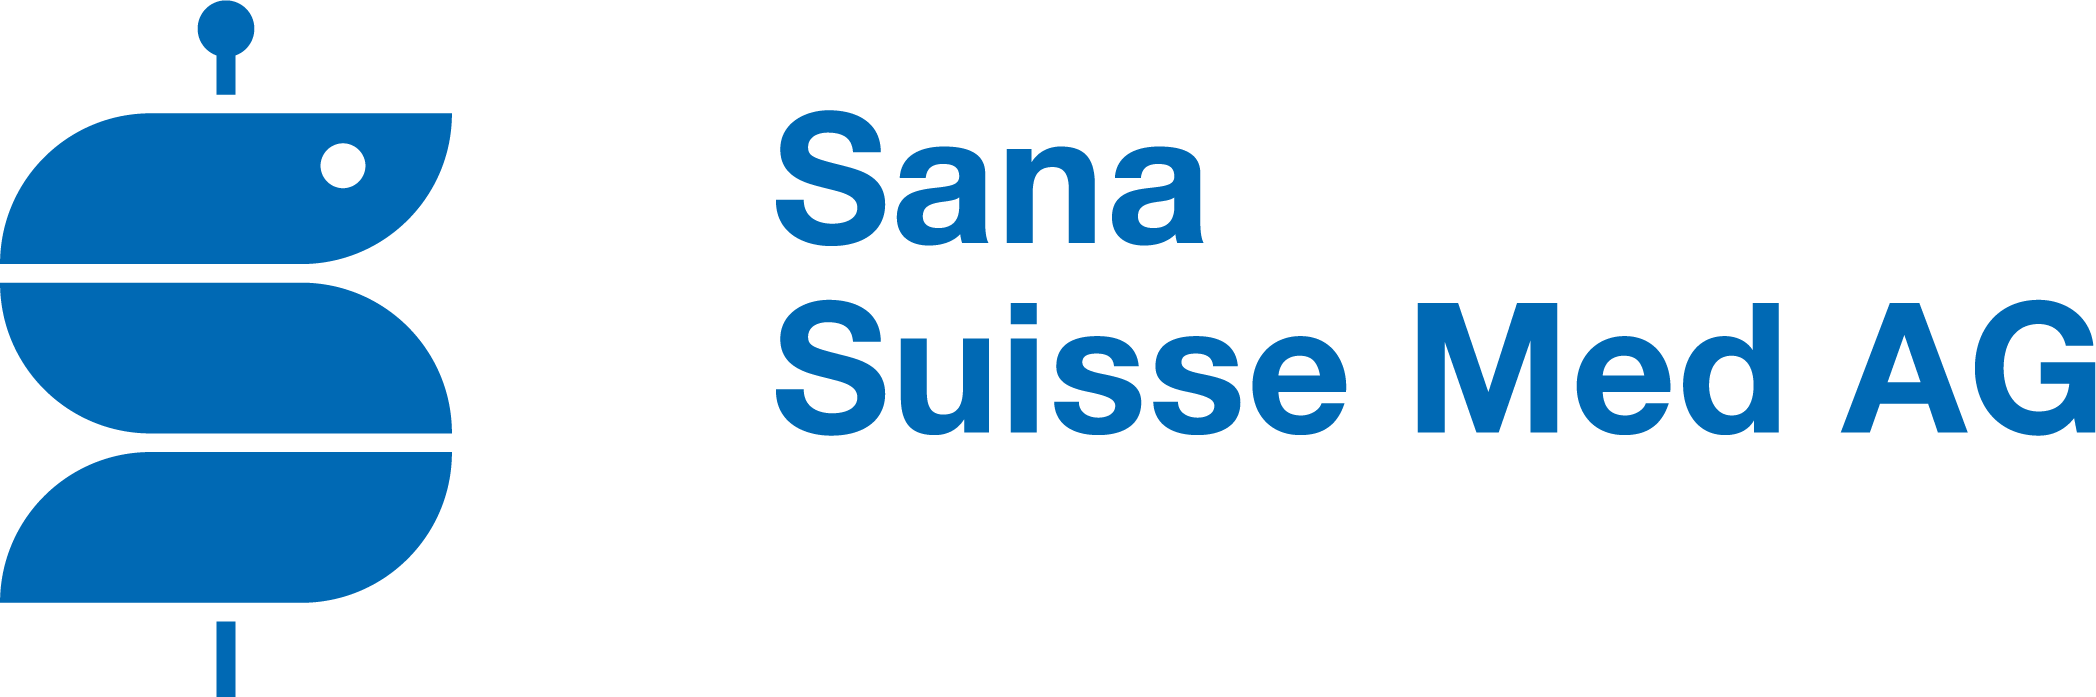 Sana Suisse Med AG